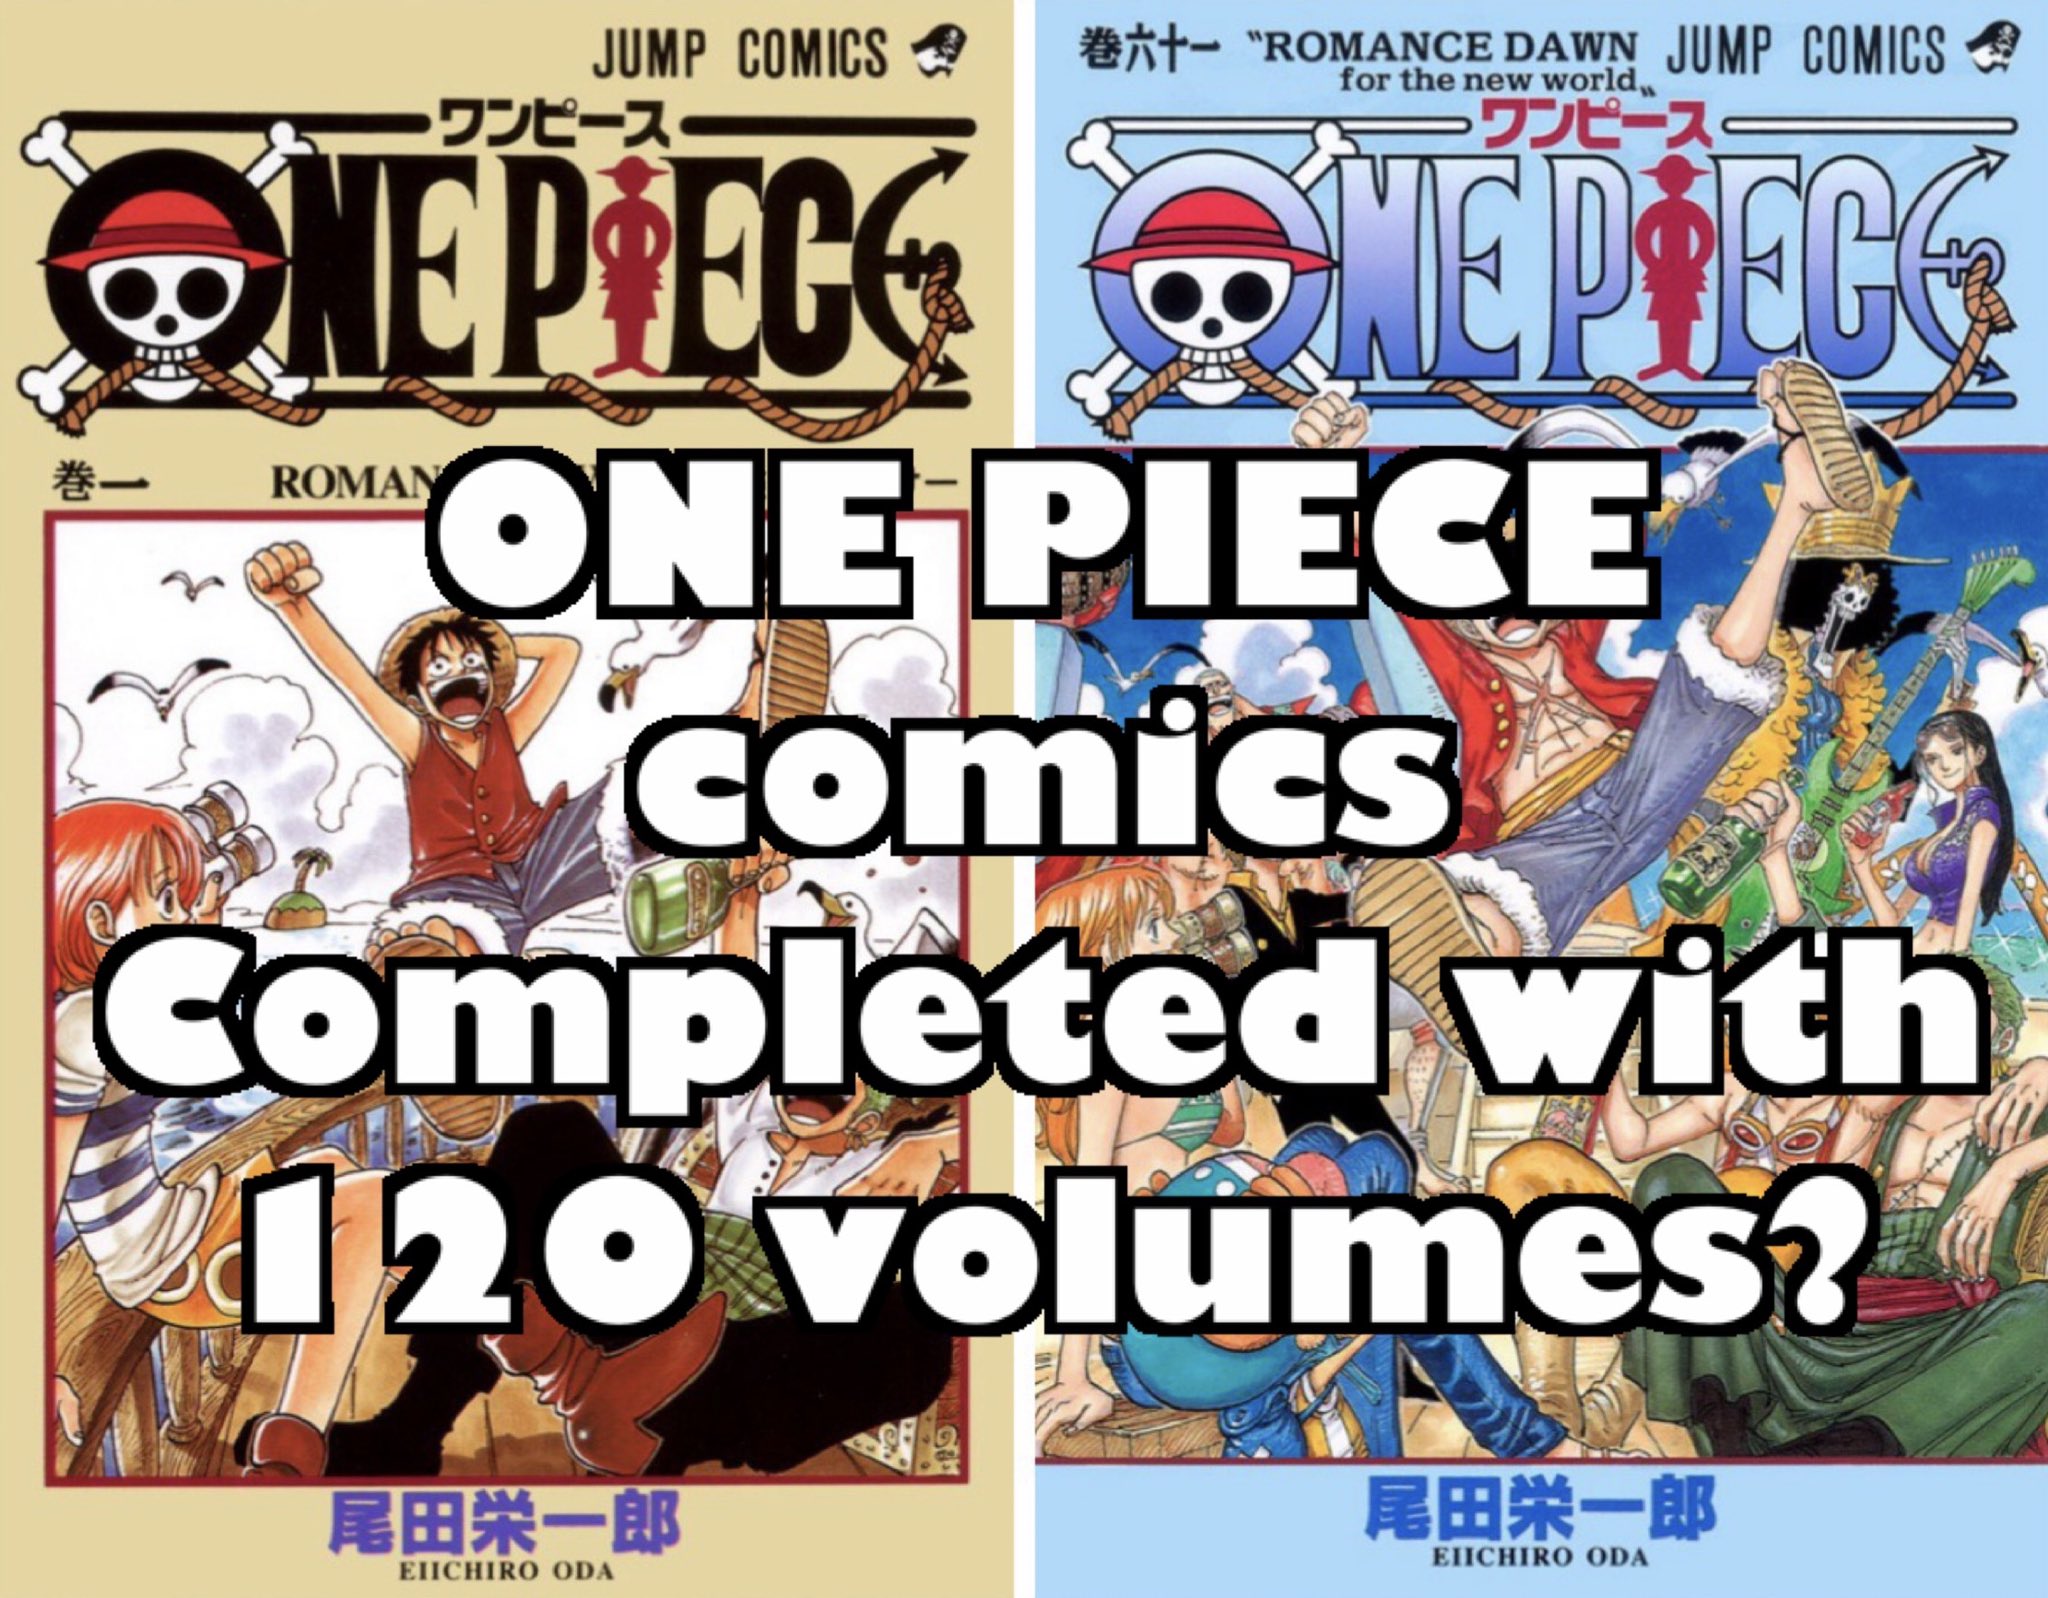 Log ワンピース考察 Auf Twitter 尾田先生の あと5年で終わりたい 発言から考えるとやはり One Piece ワンピース コミックス1巻完結説を考える T Co Uot7qnq4ie T Co L2hzmmxggr Twitter